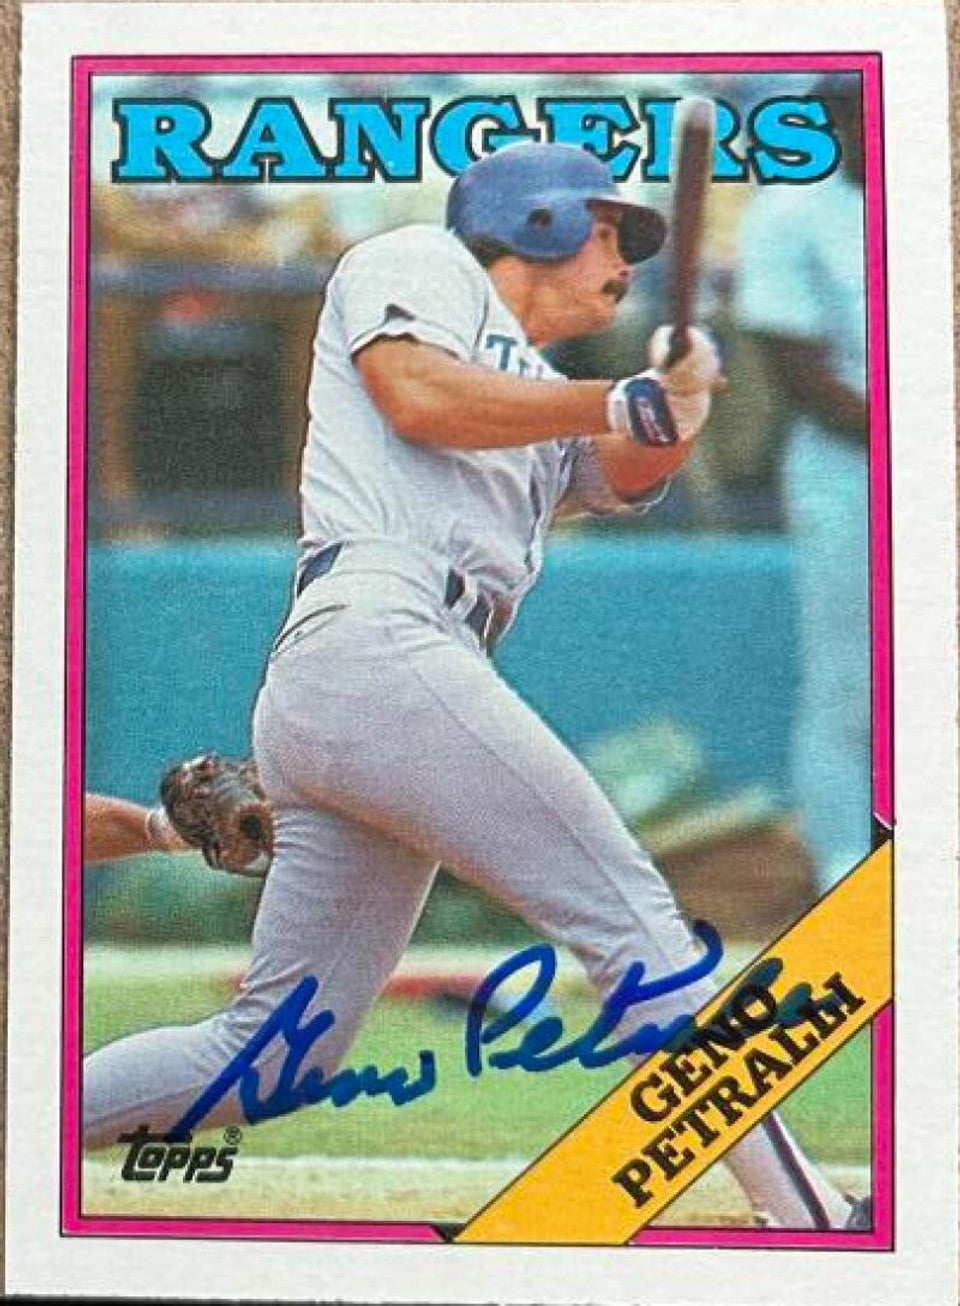 Geno Petralli Signed 1988 Topps Baseball Card - Texas Rangers